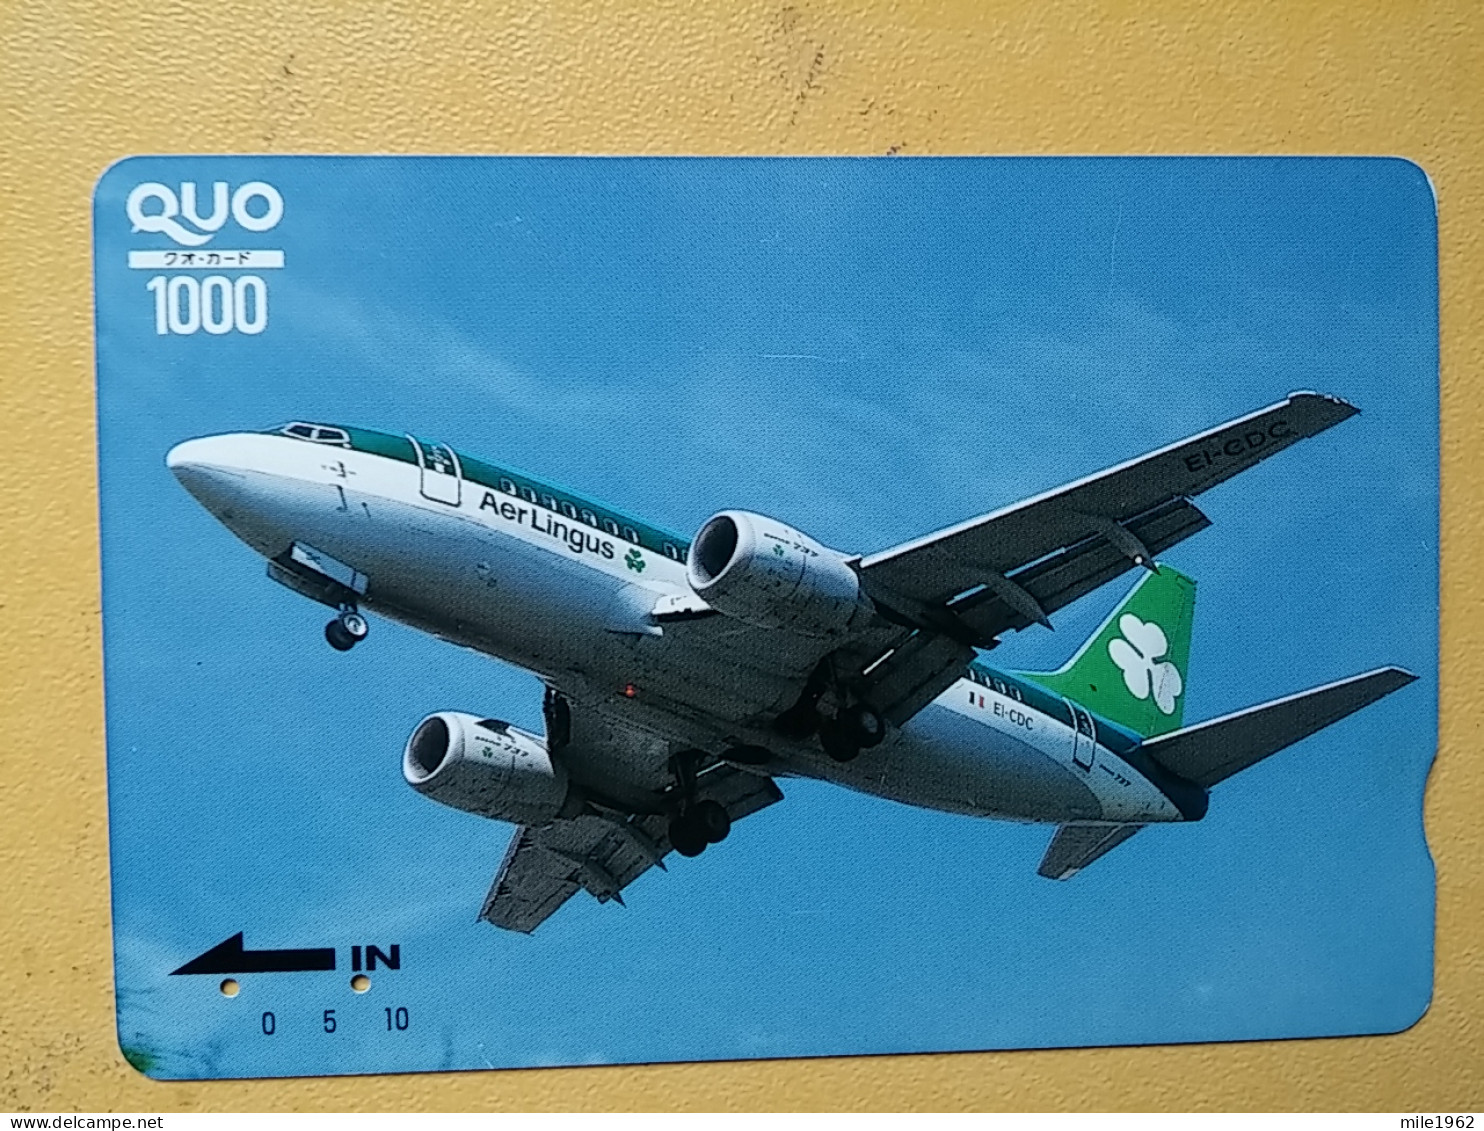 T-443 - JAPAN, Japon, Nipon, Carte Prepayee, Prepaid Card, Avion, Plane, Avio - Aerei